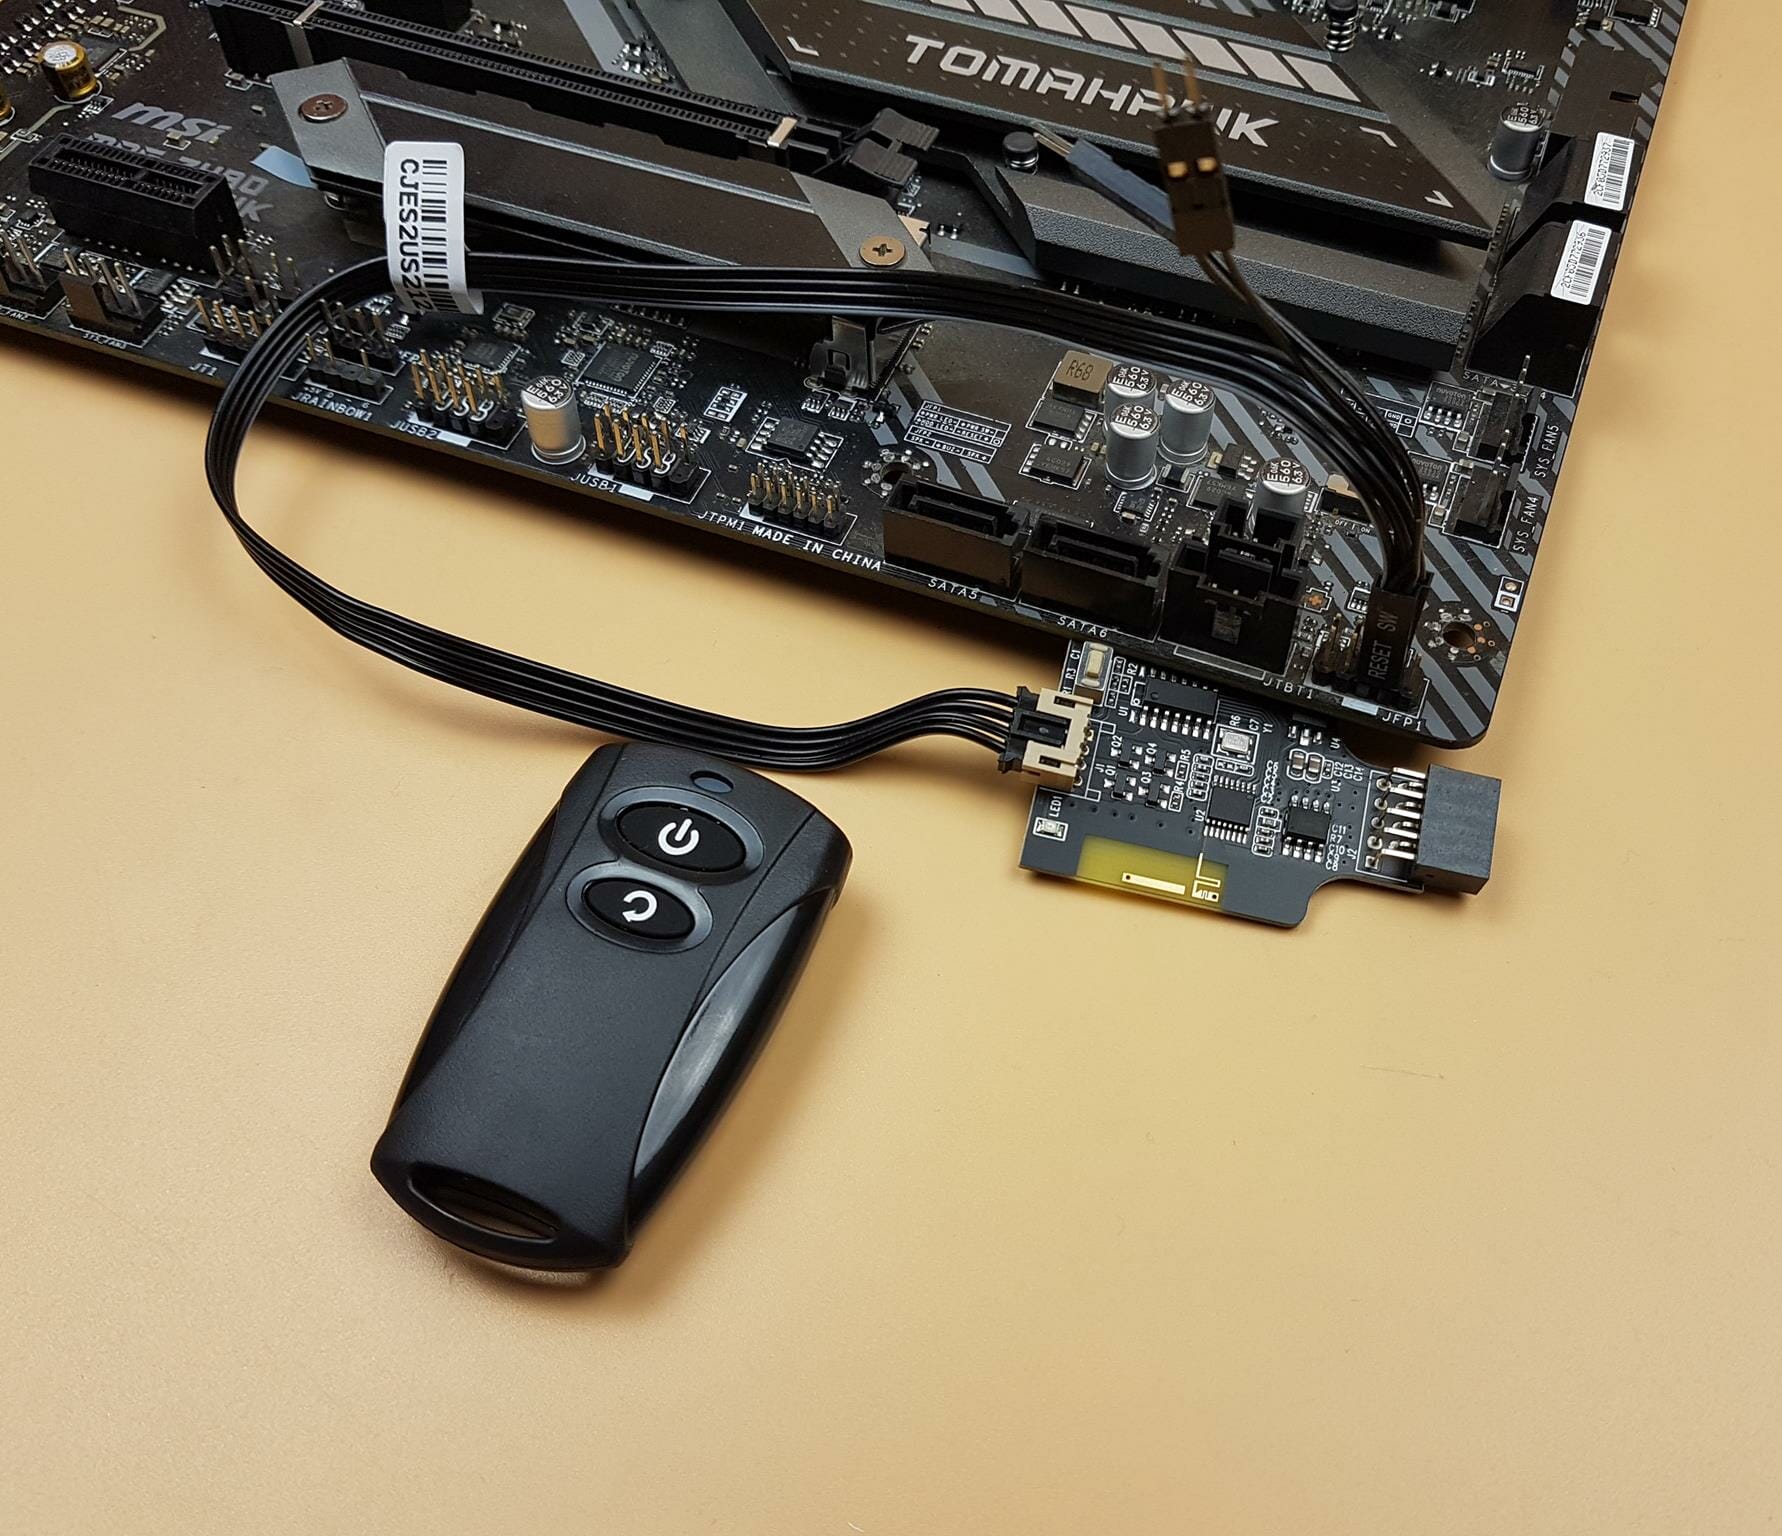 Silverstone SST-ES02-USB Remote Switch Kit 